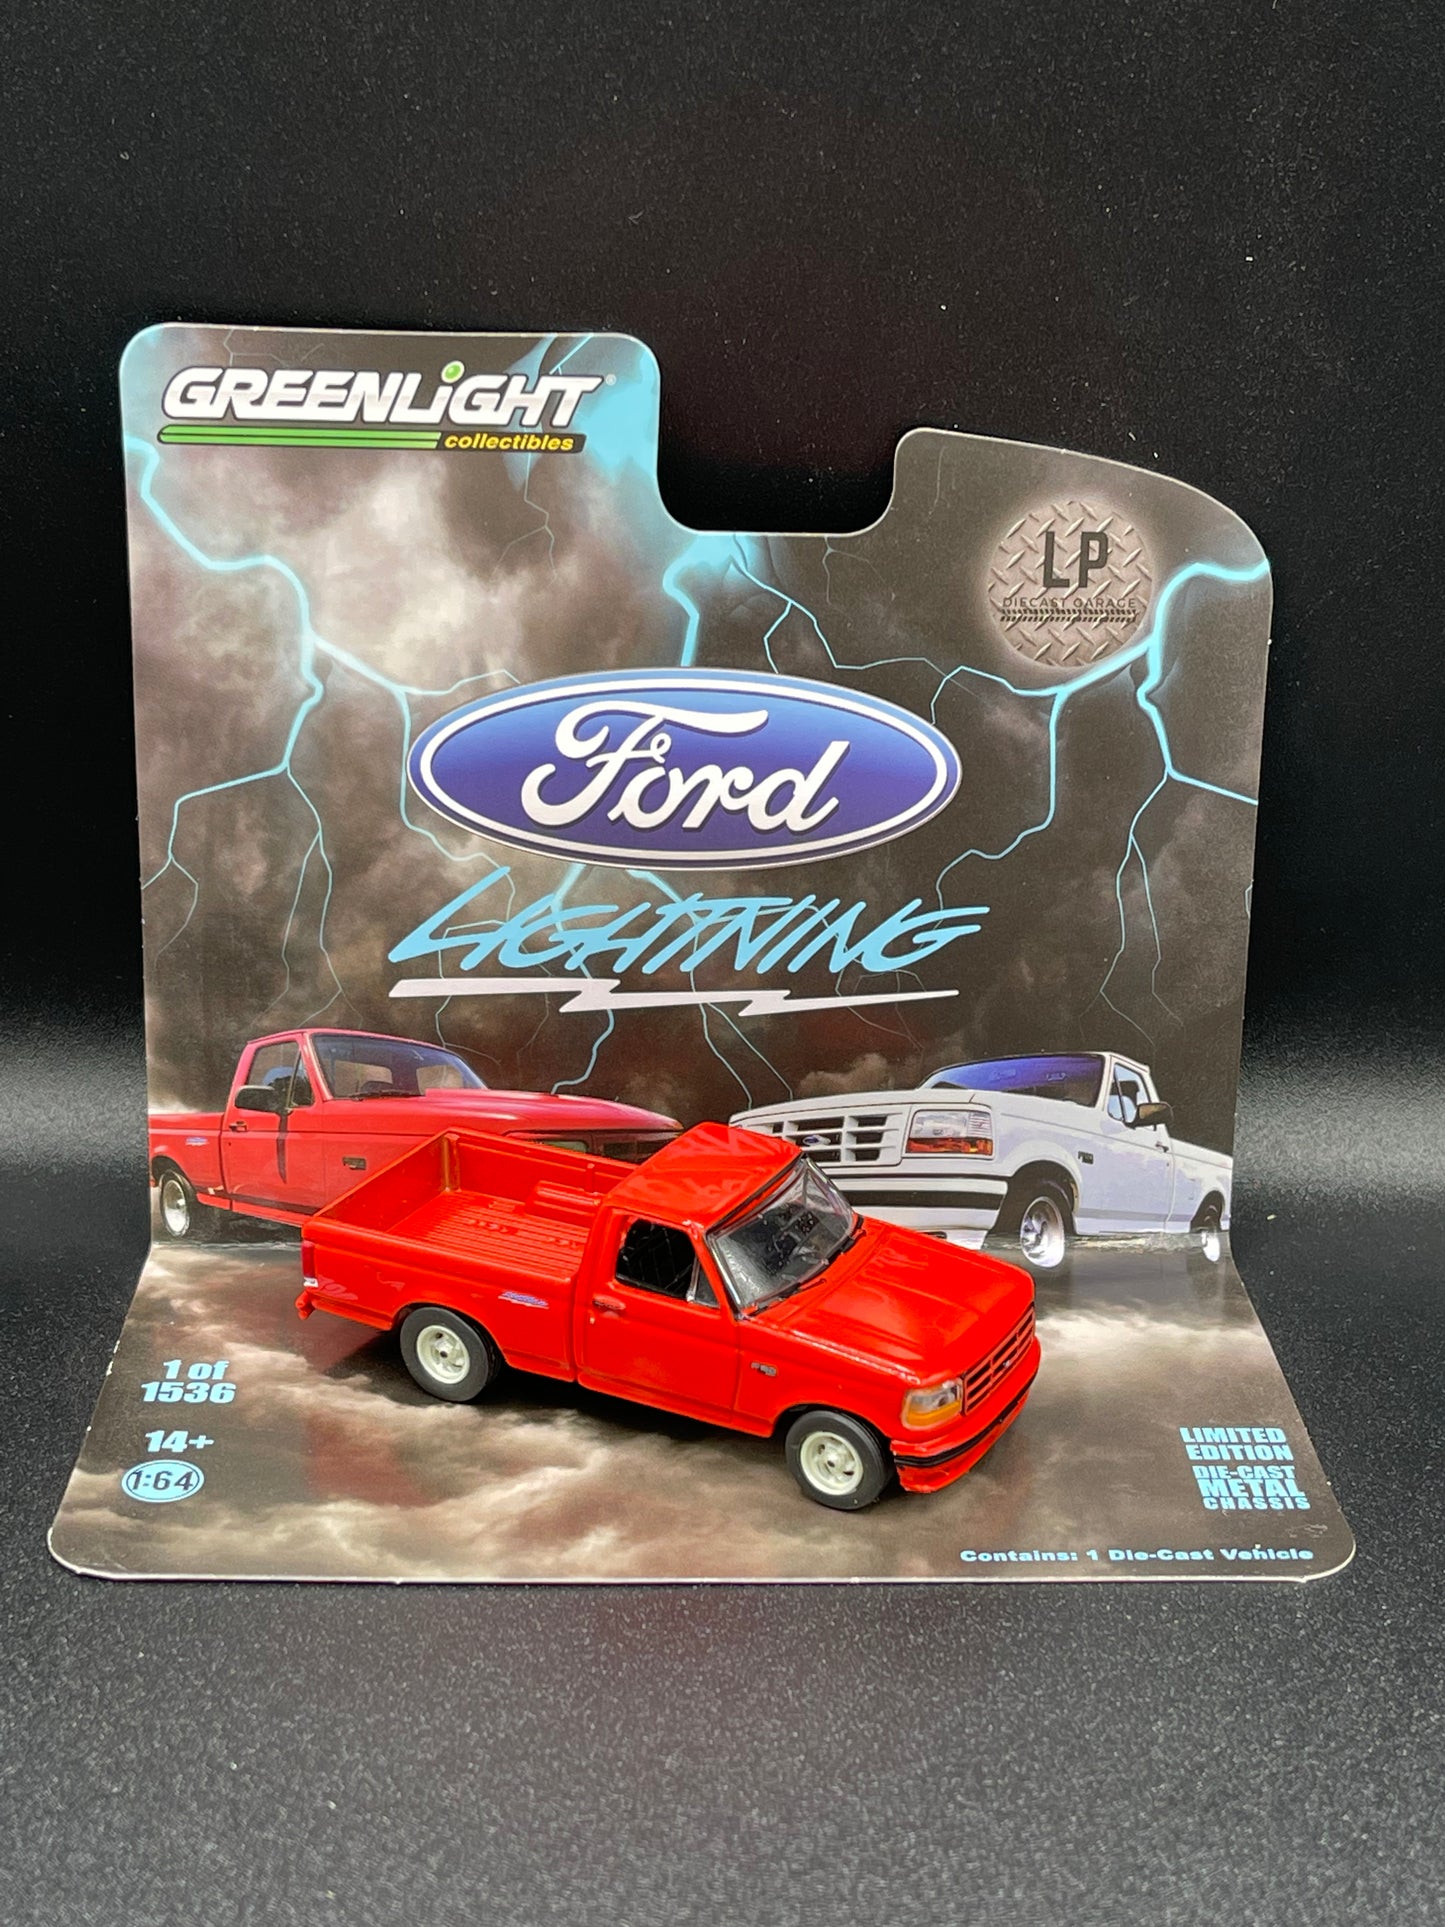 GREENLIGHT 1995 Ford F-150 Lightning Truck Red LP Diecast Garage Exclusive 1:64 Diecast Promo 51516